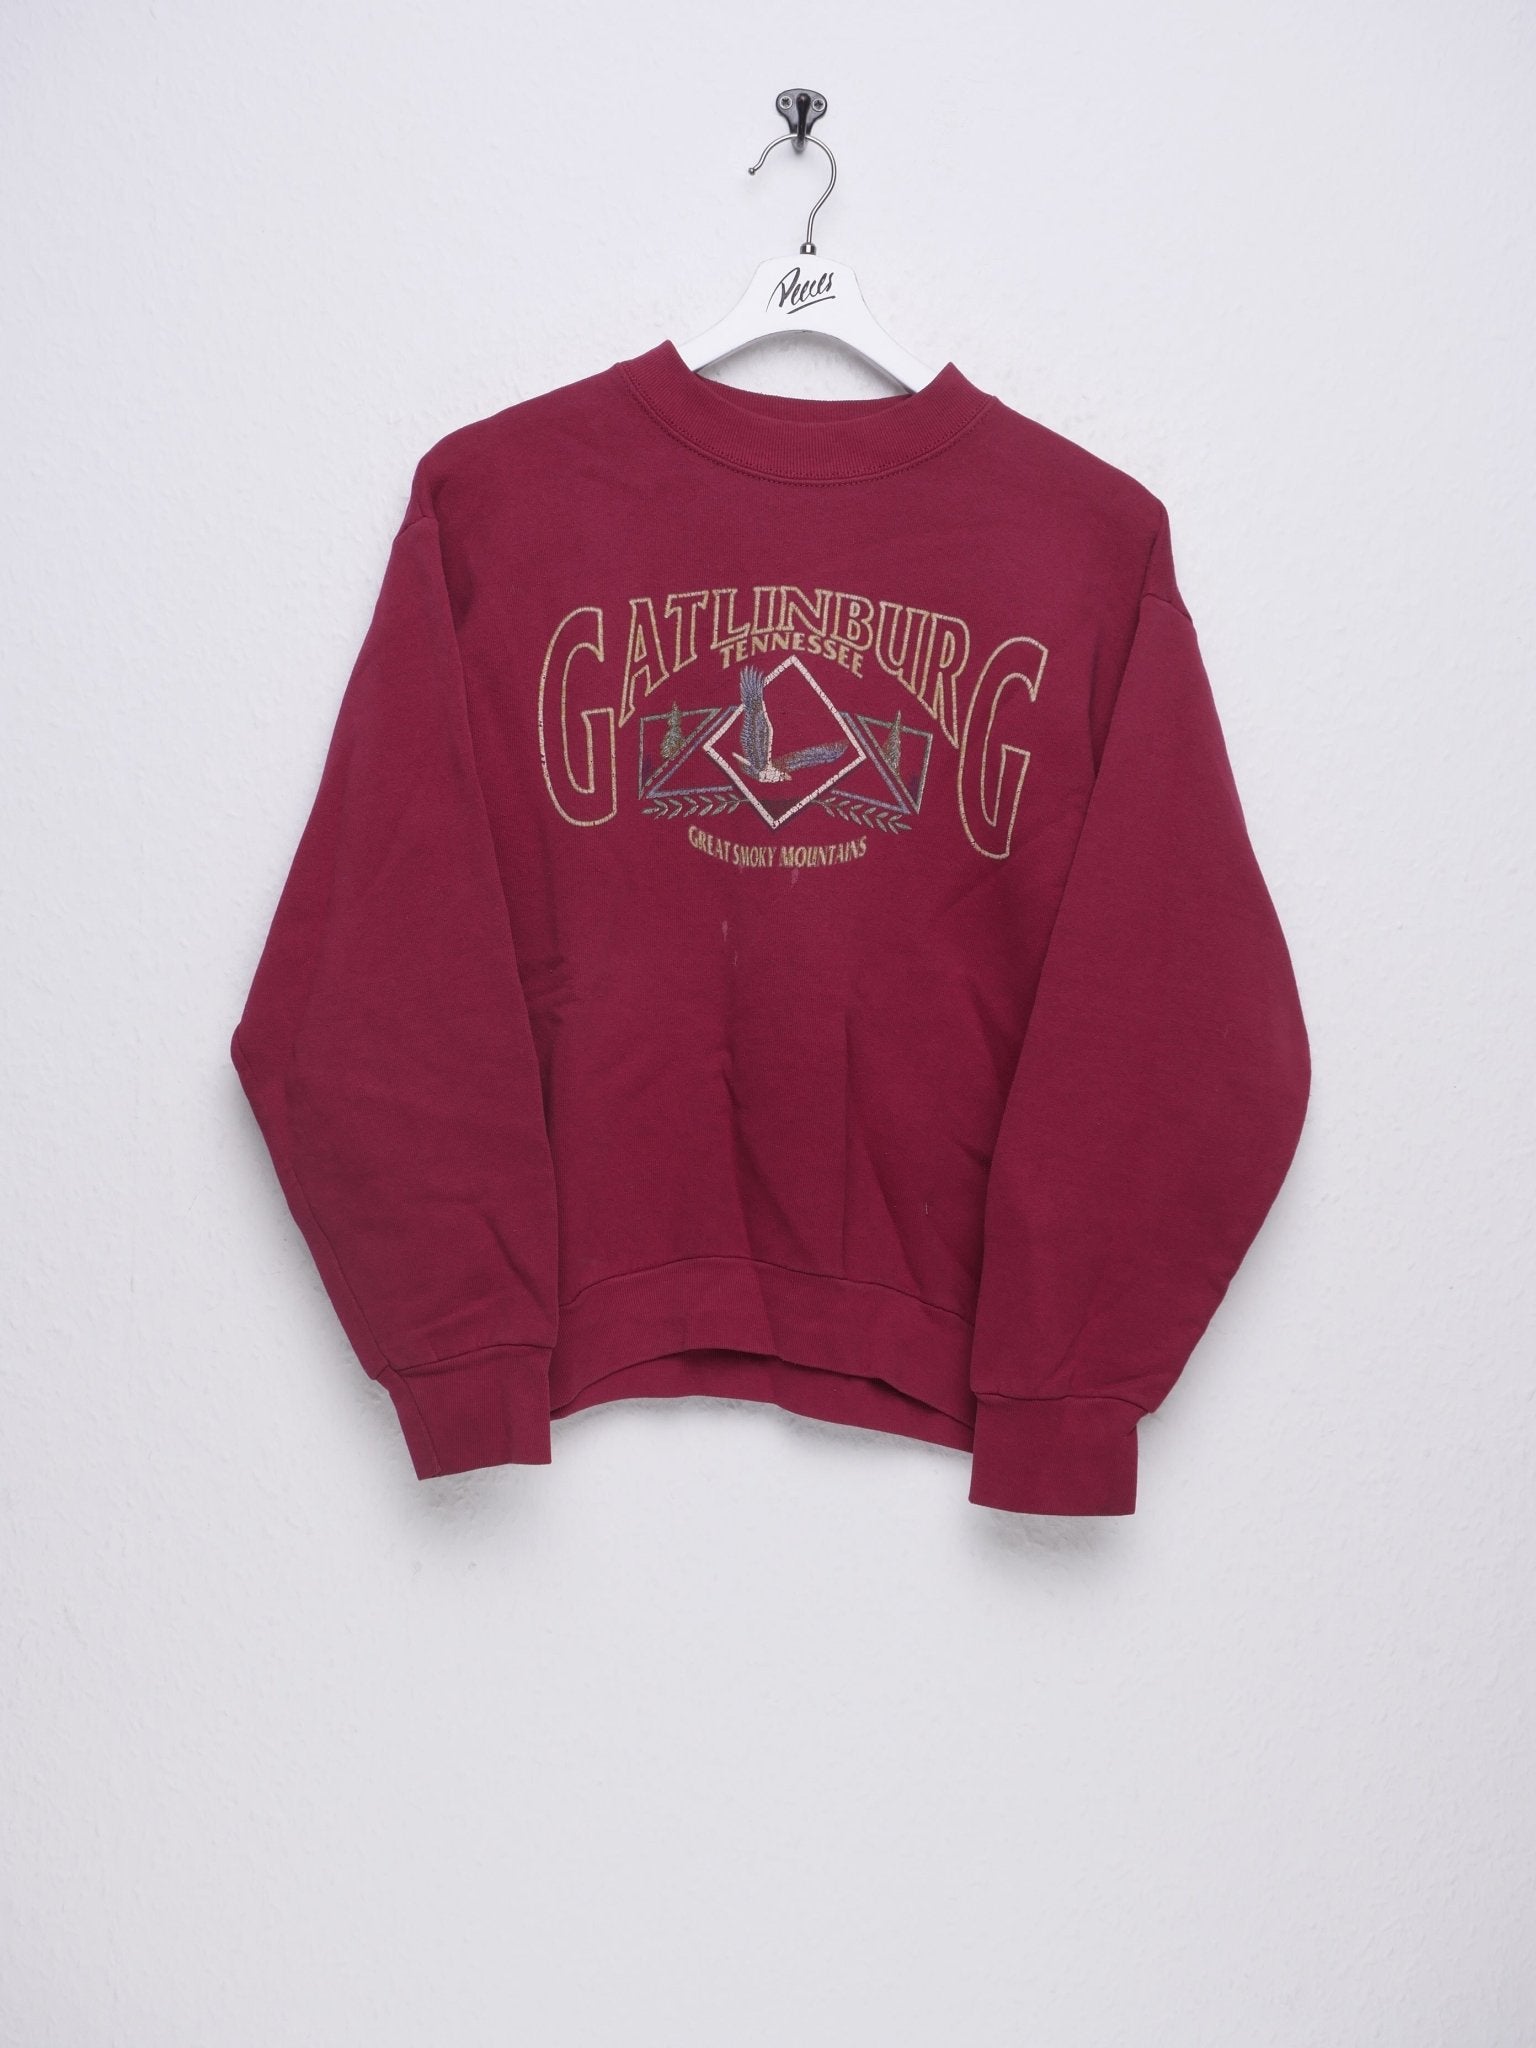 Gatlinburg printed Graphic Vintage Sweater - Peeces